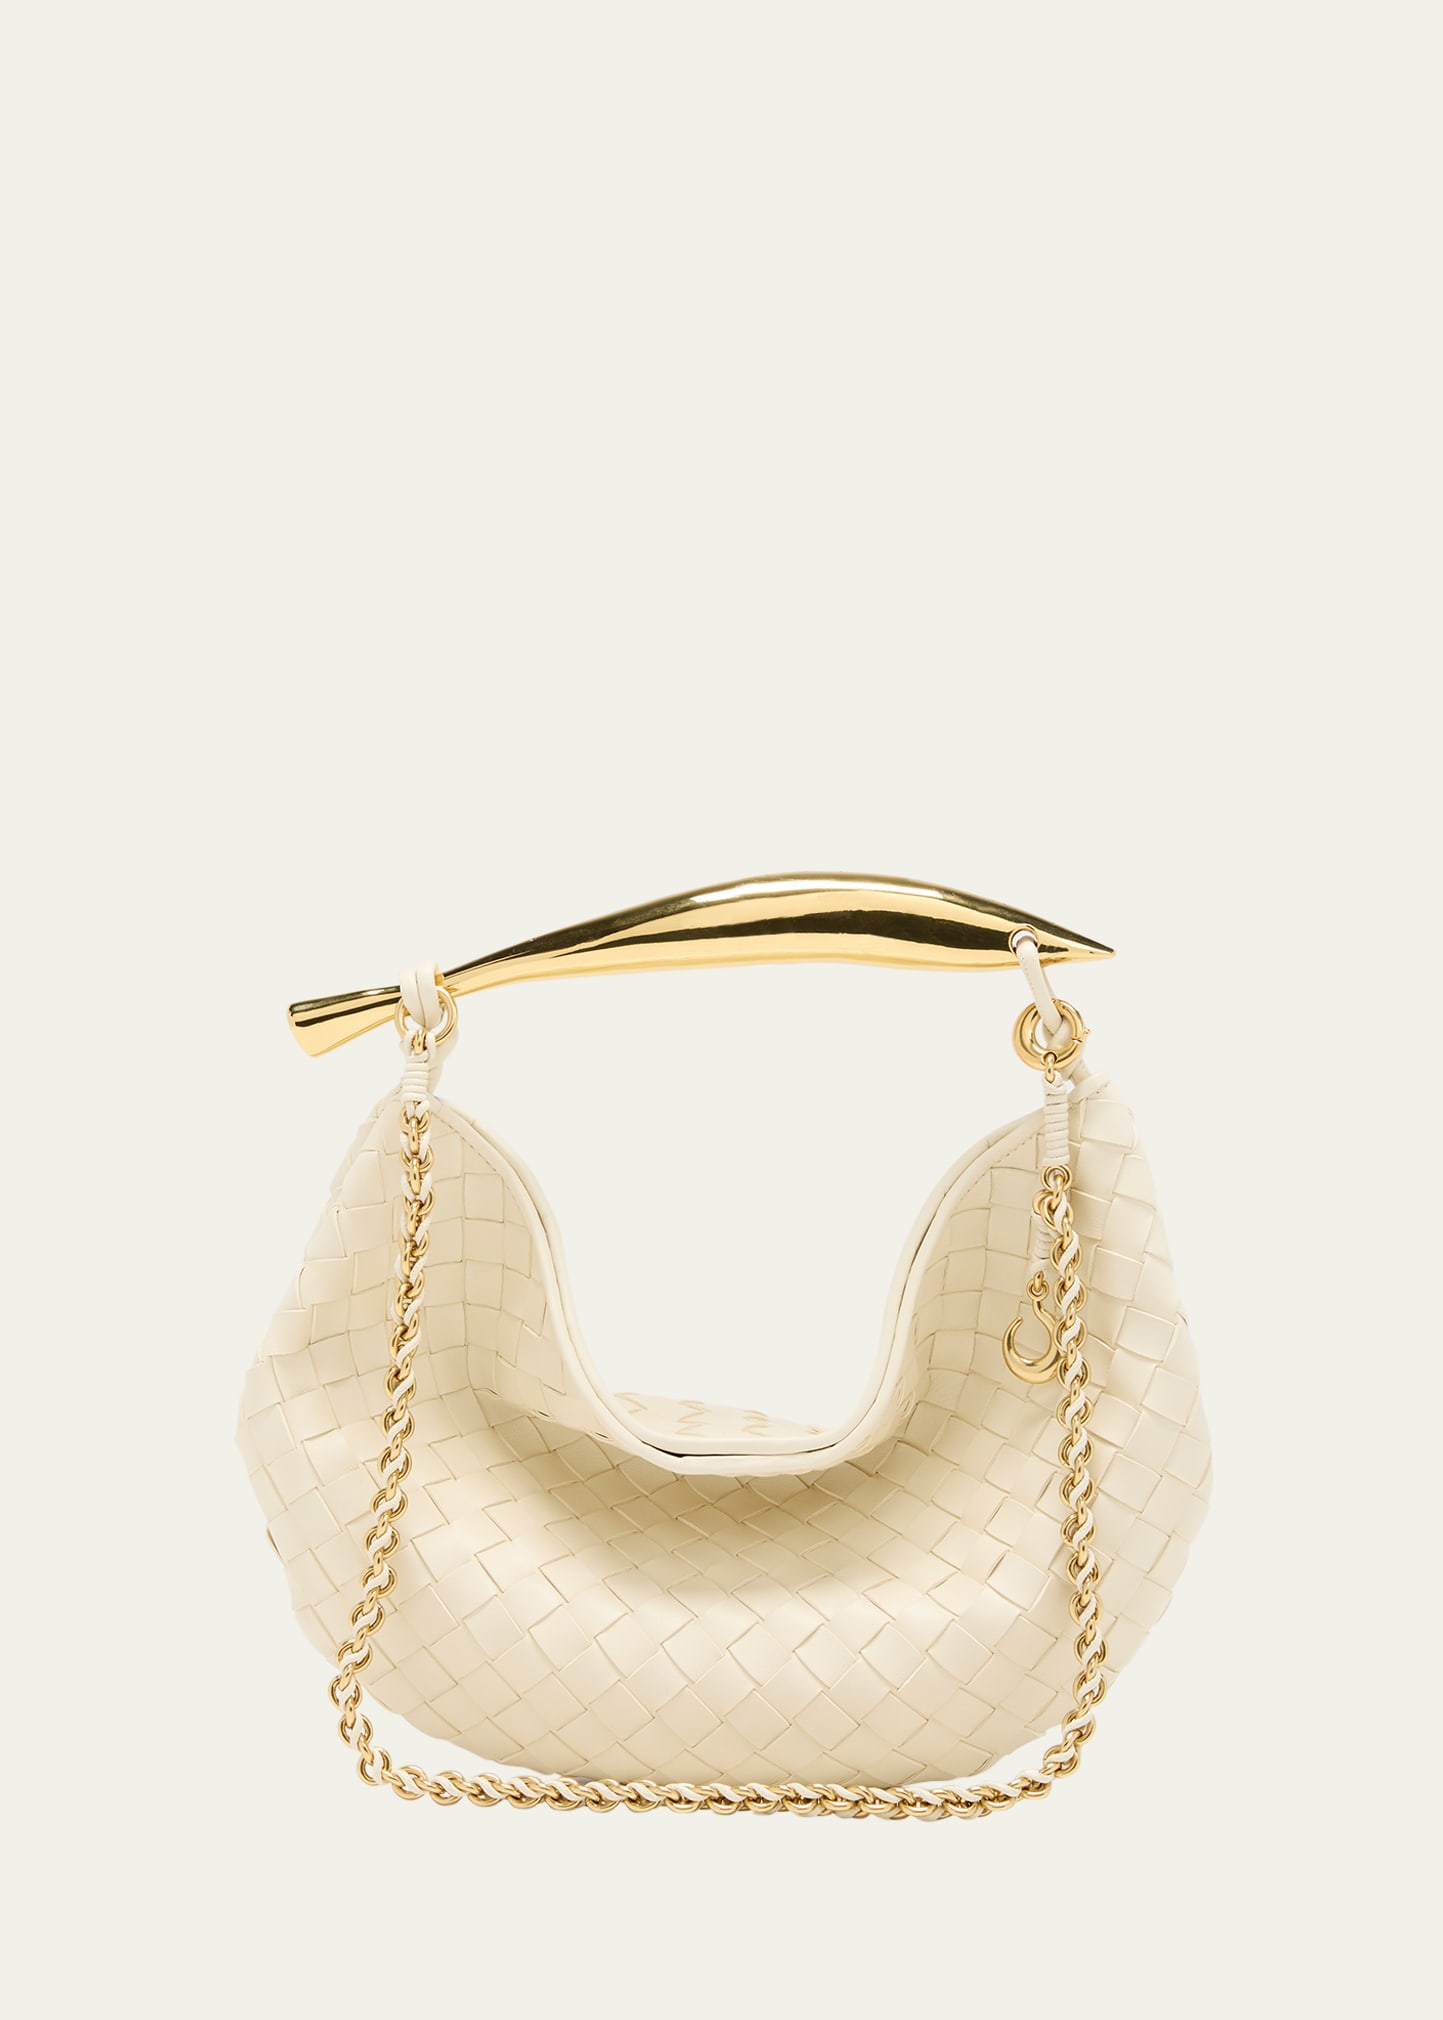 Sardine Bag with Chain